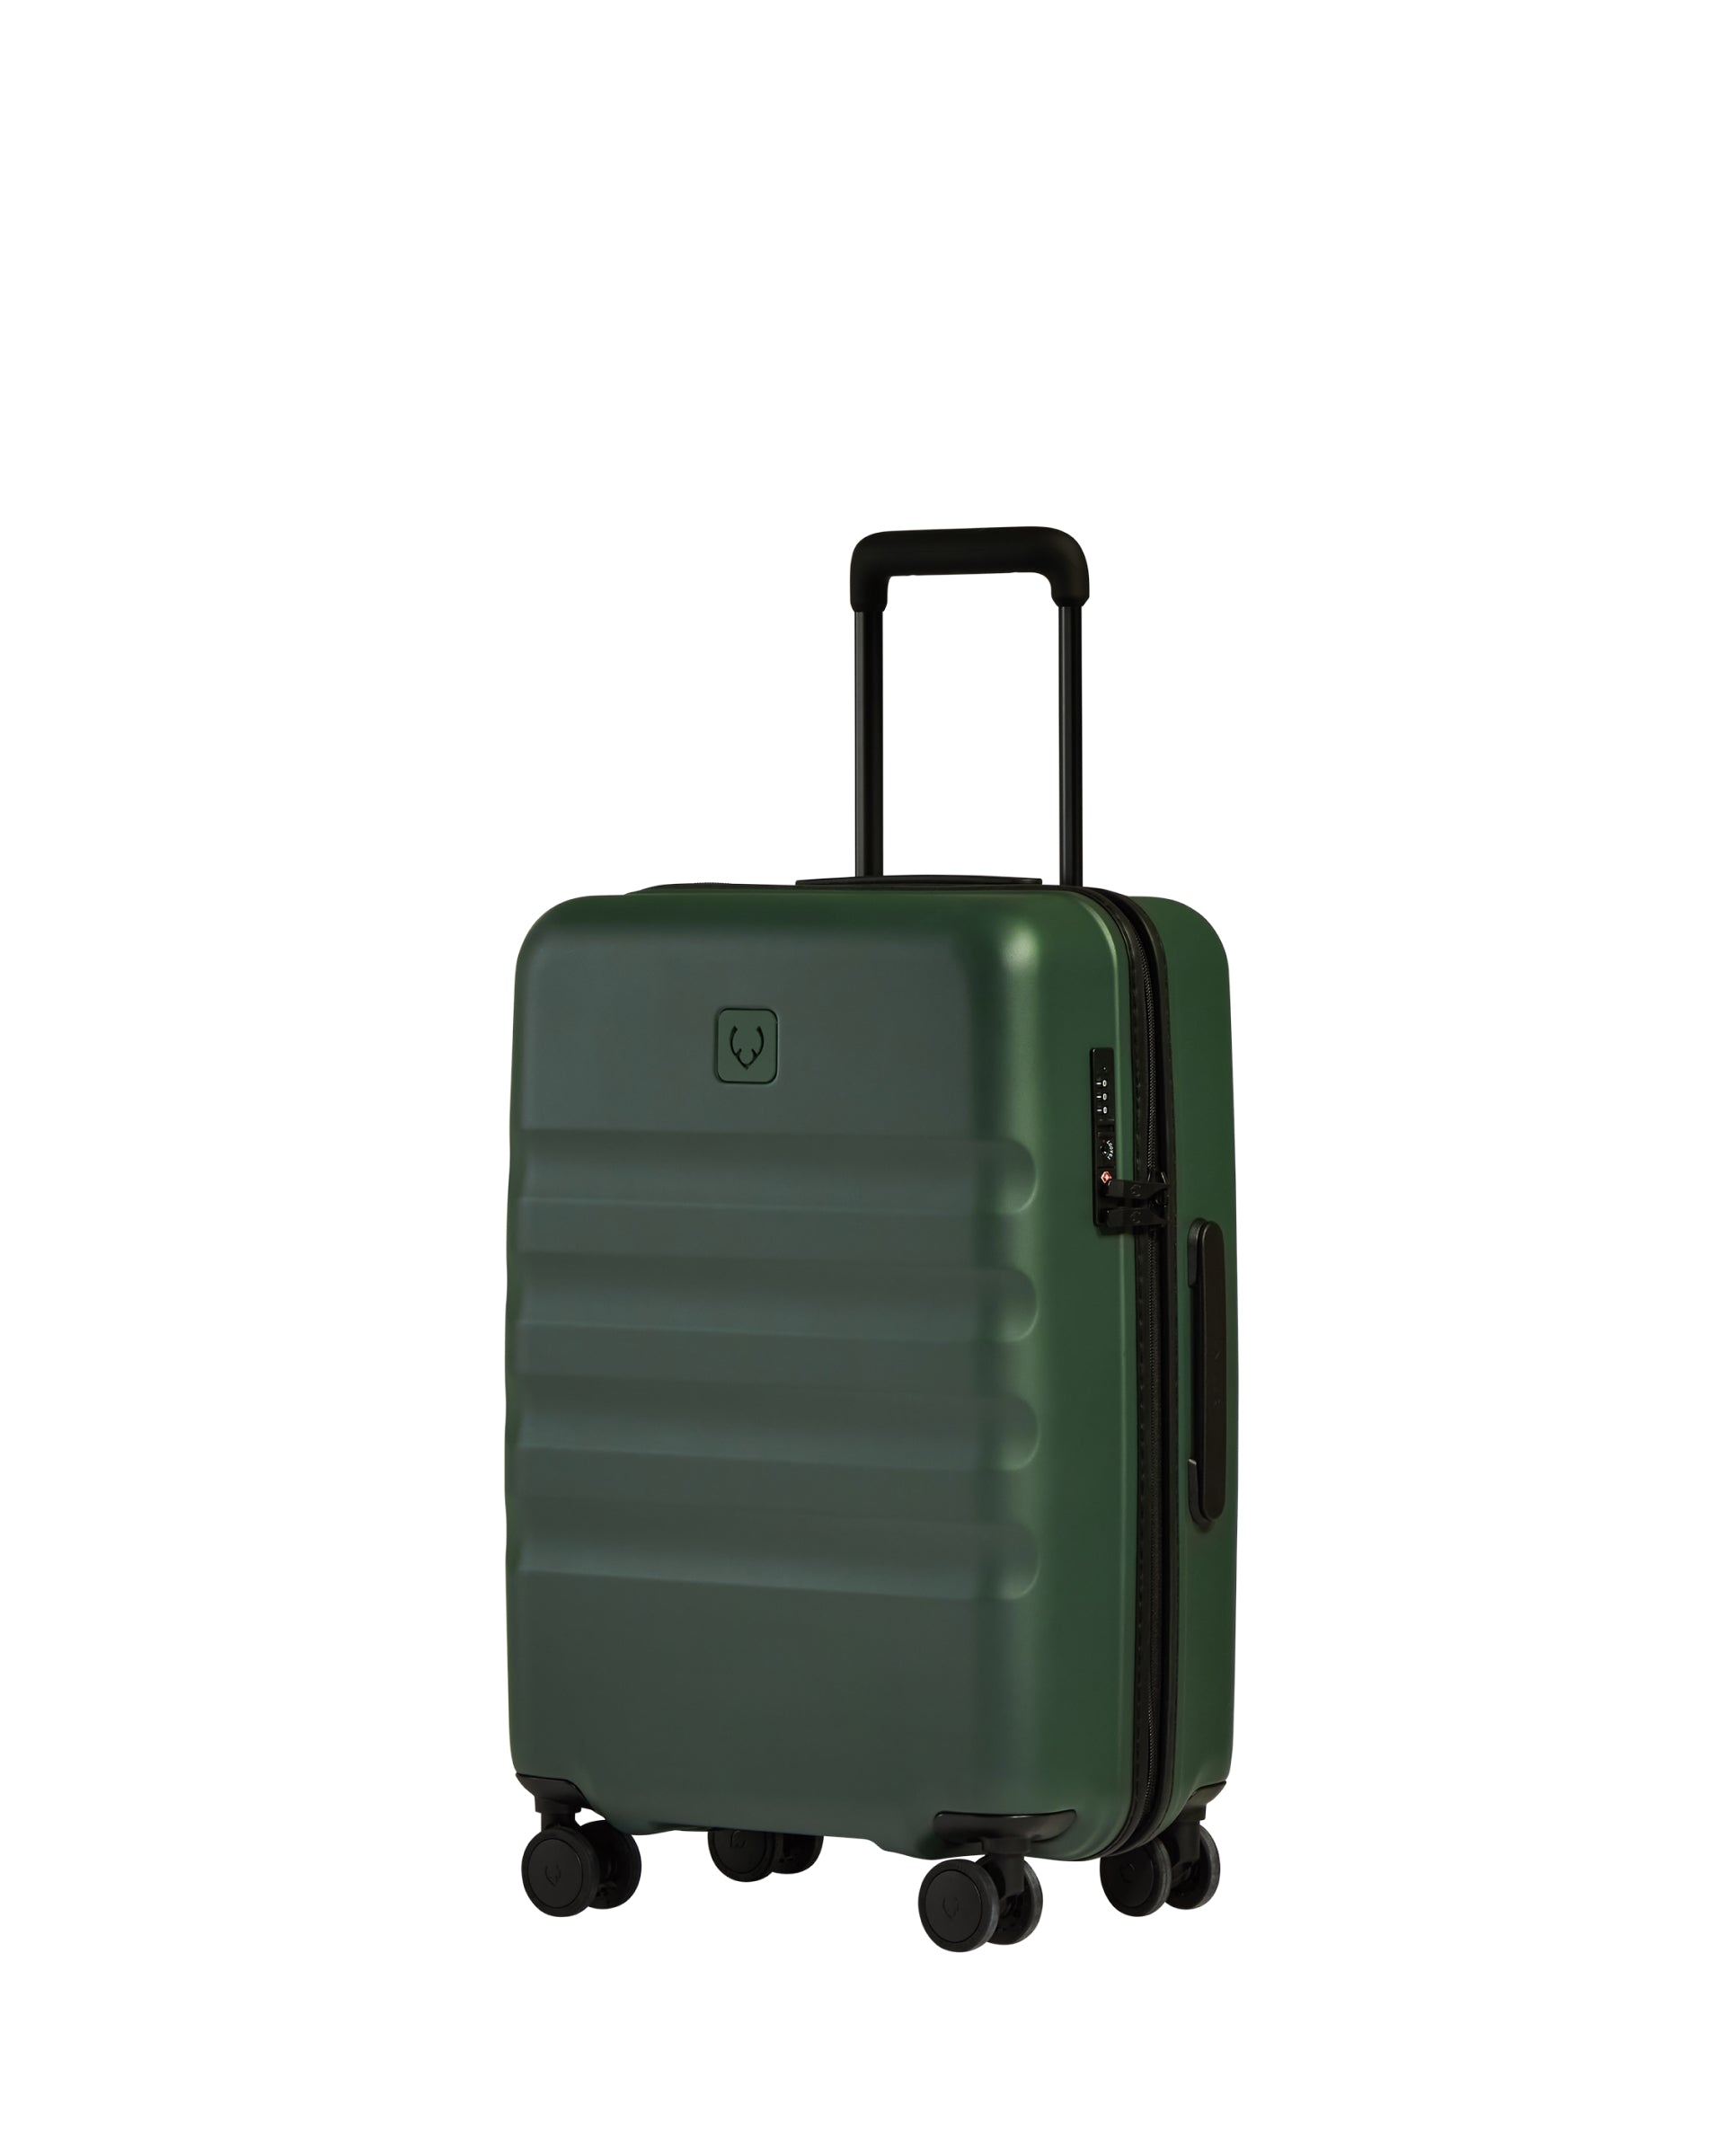 View Icon Stripe Biggest Cabin Suitcase In Antler Green Size 24cm x 58cm x 395cm information